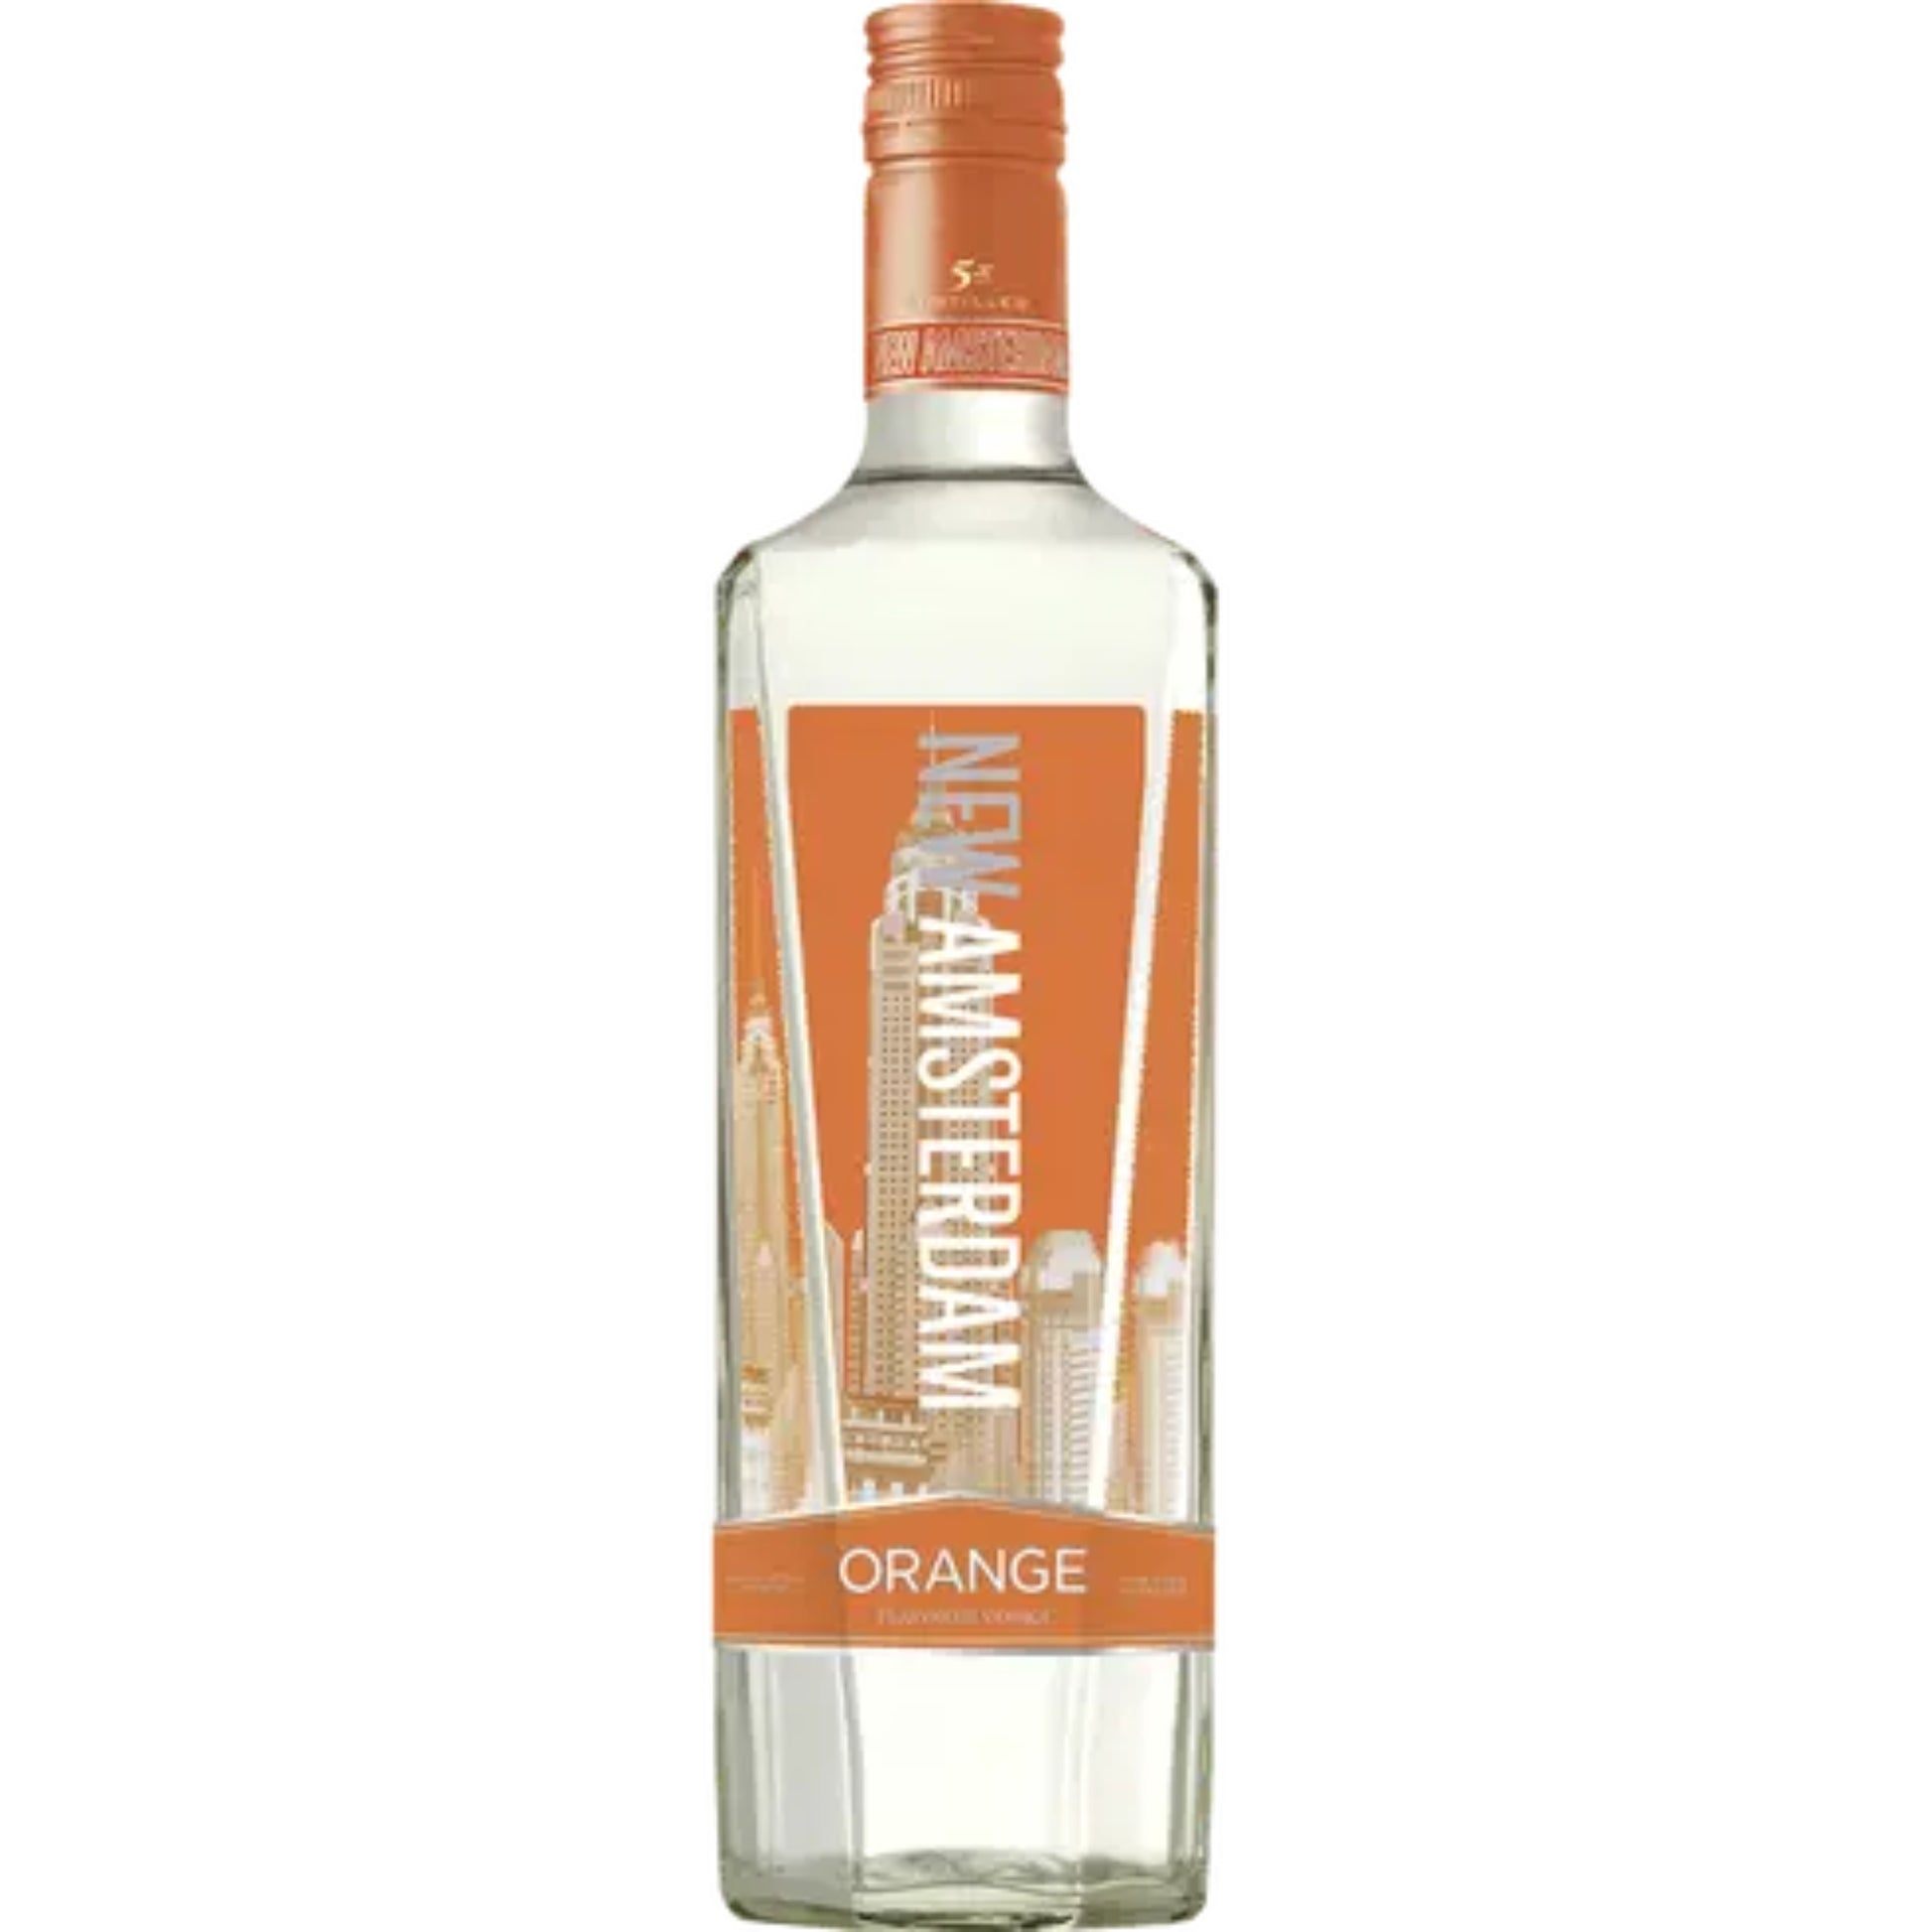 New Amsterdam Orange Vodka - Liquor Geeks